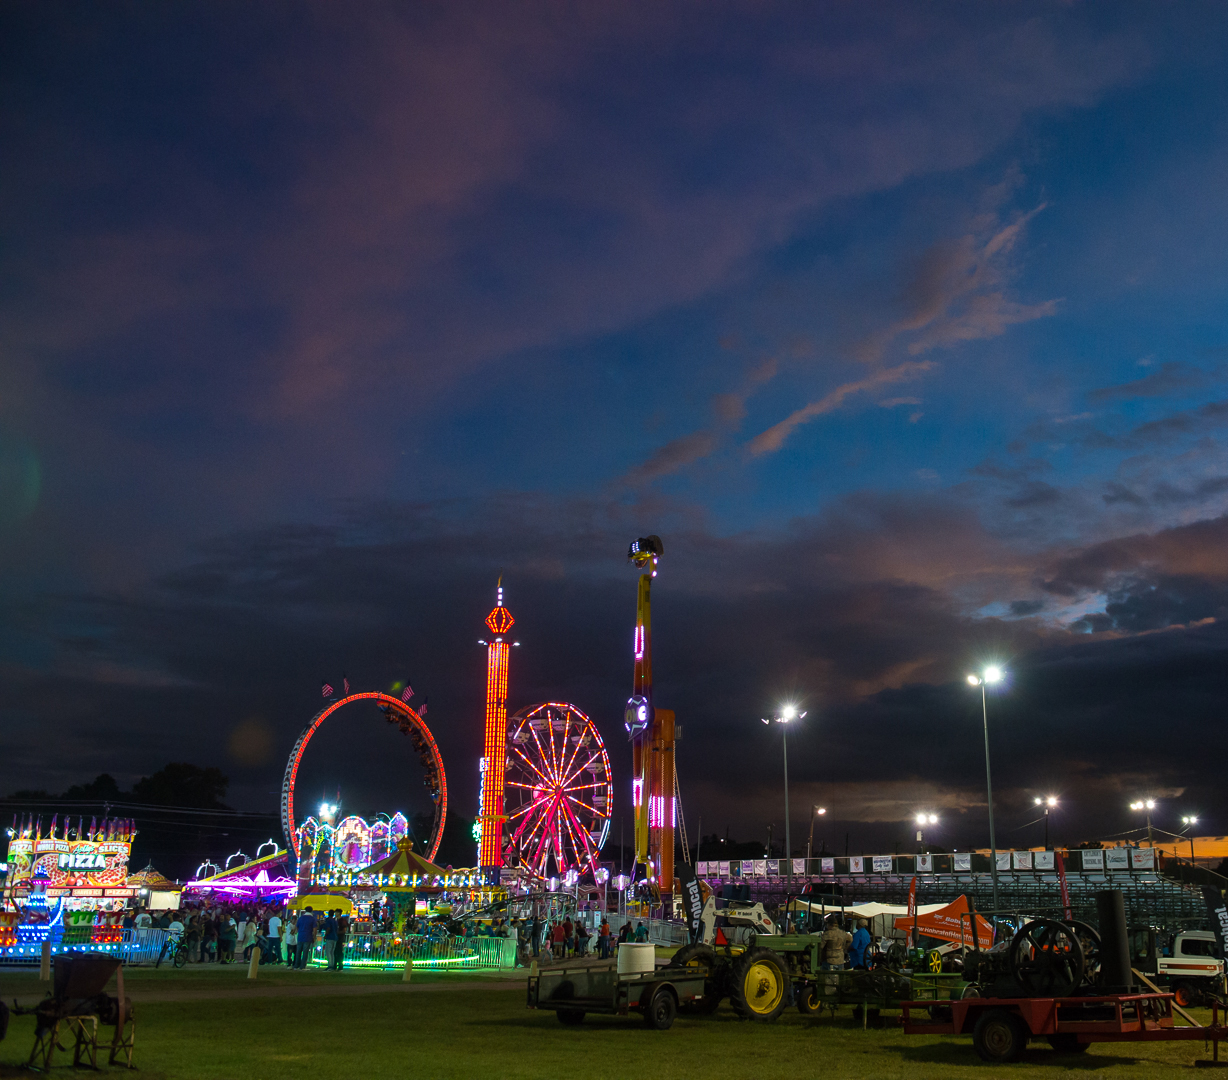 The Washington County Fair Visit Brenham Texas